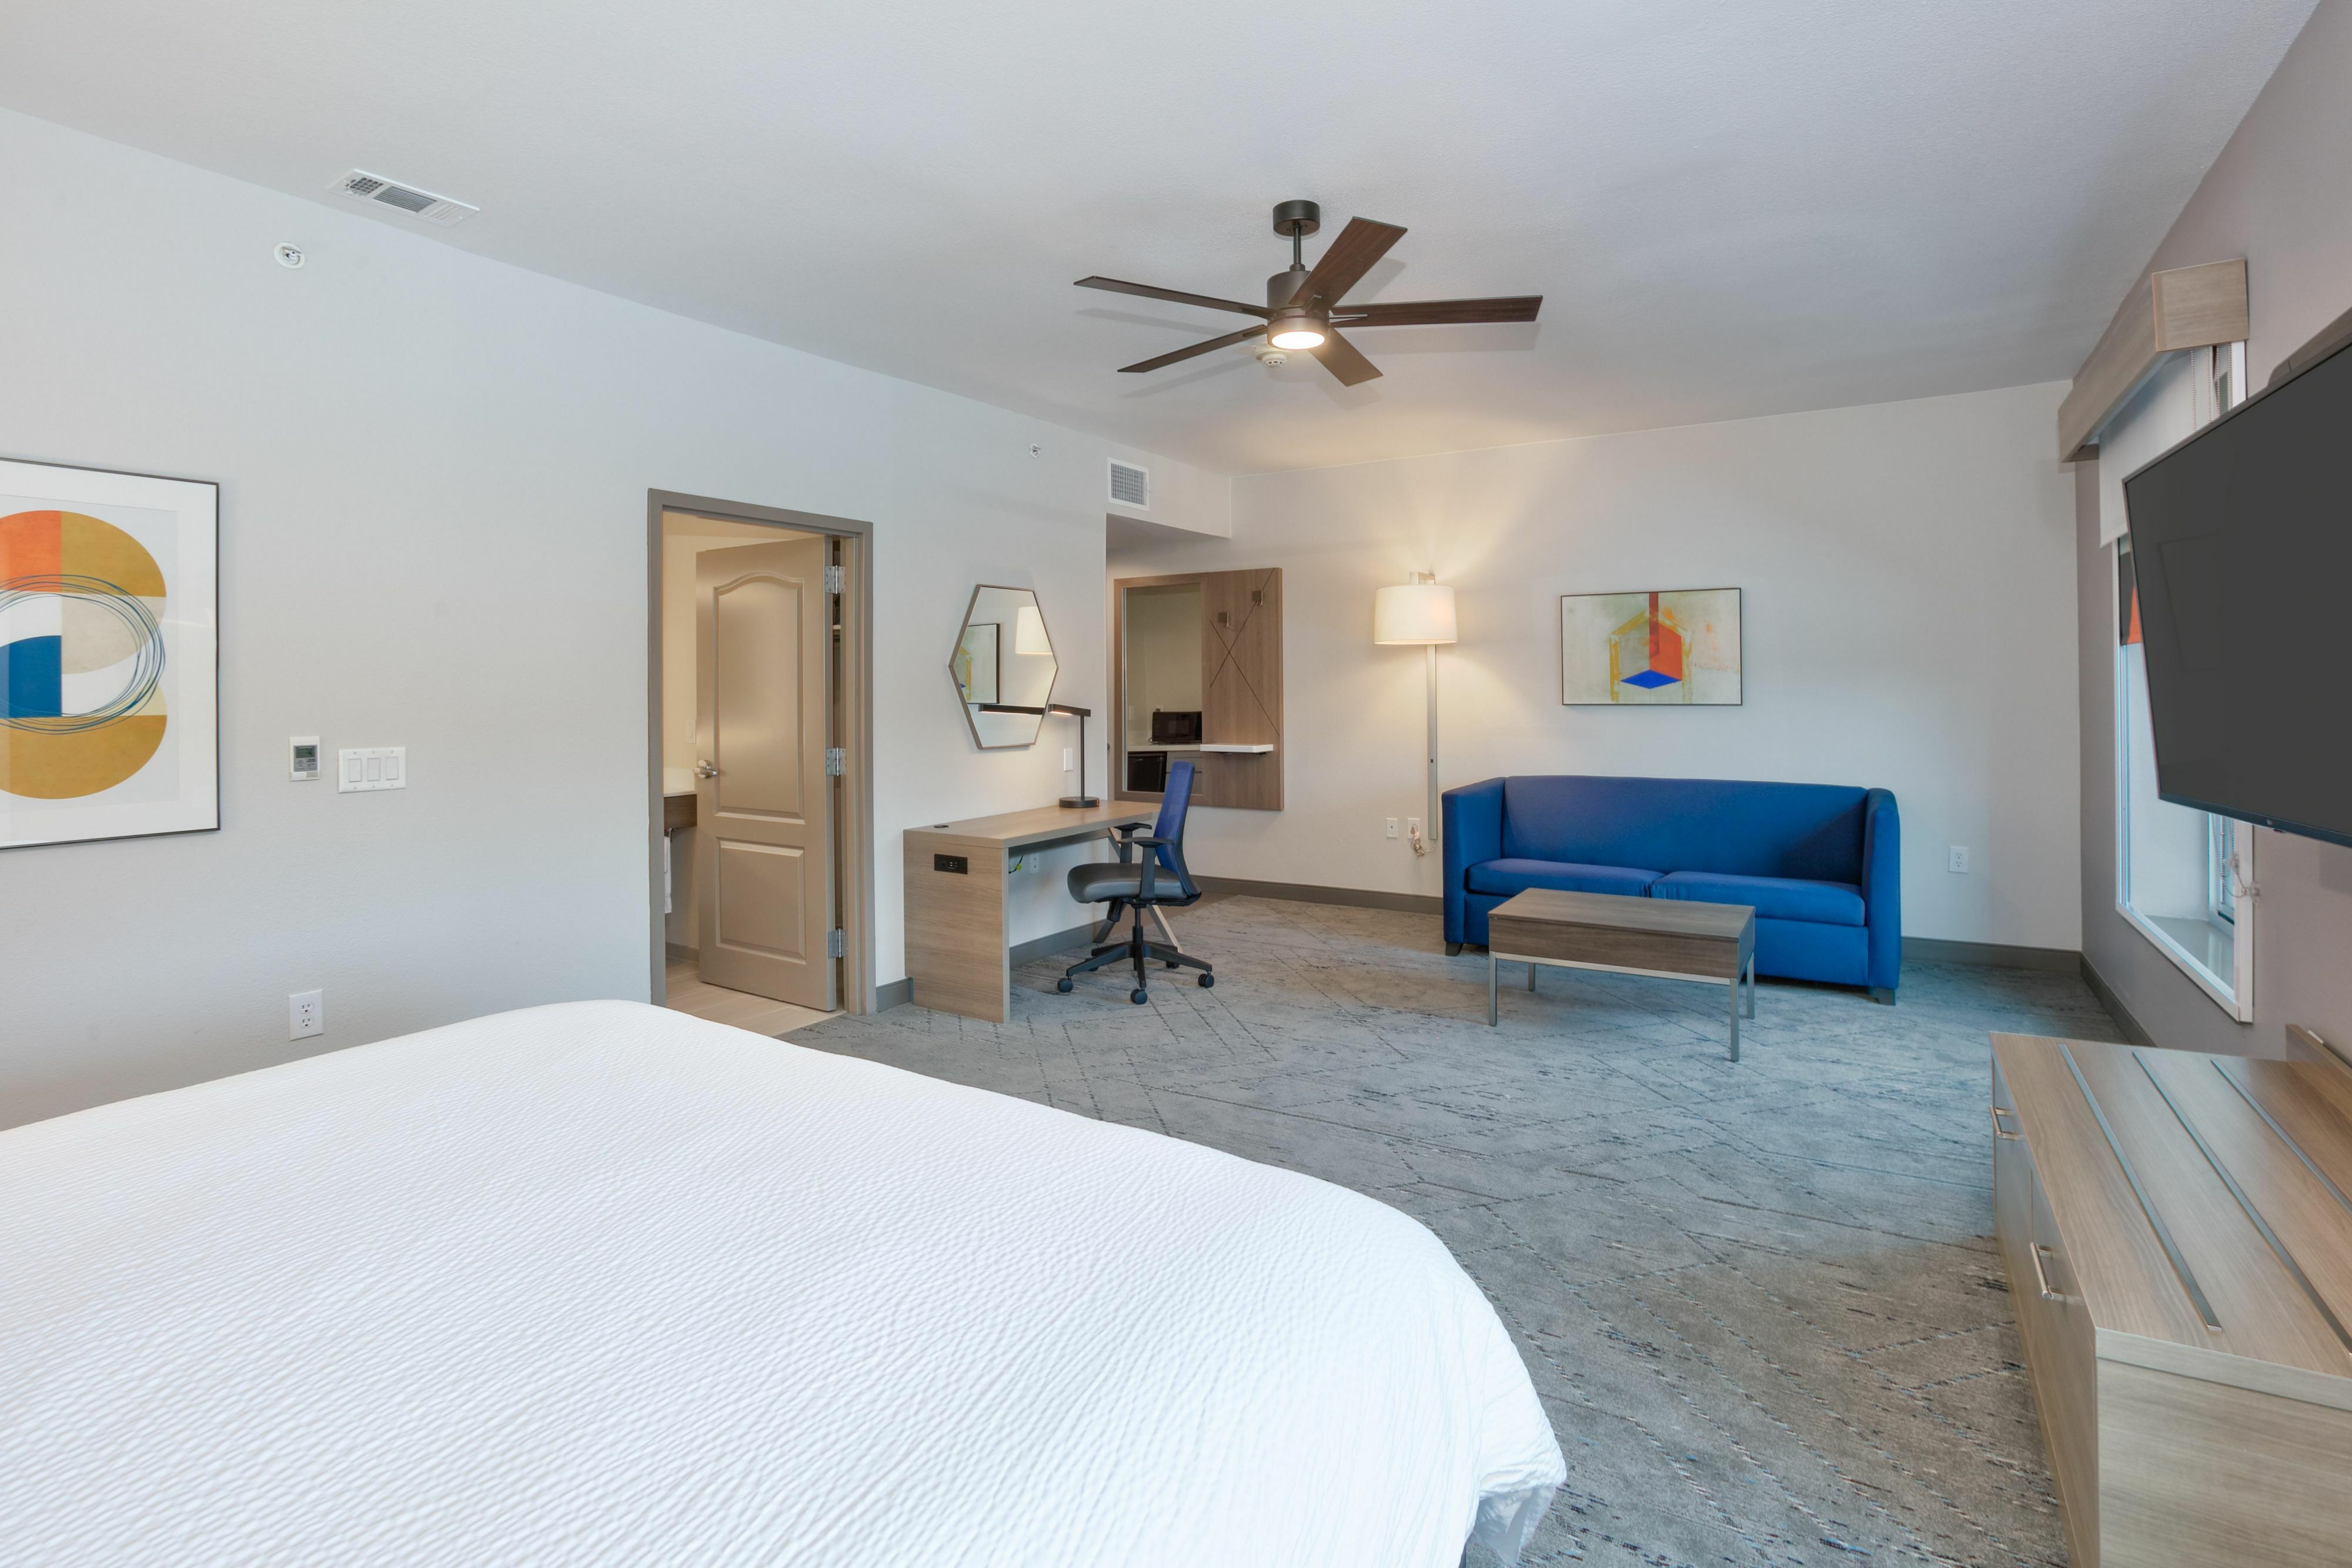 Photo of Holiday Inn Express & Suites North Dallas at Preston, Dallas, TX